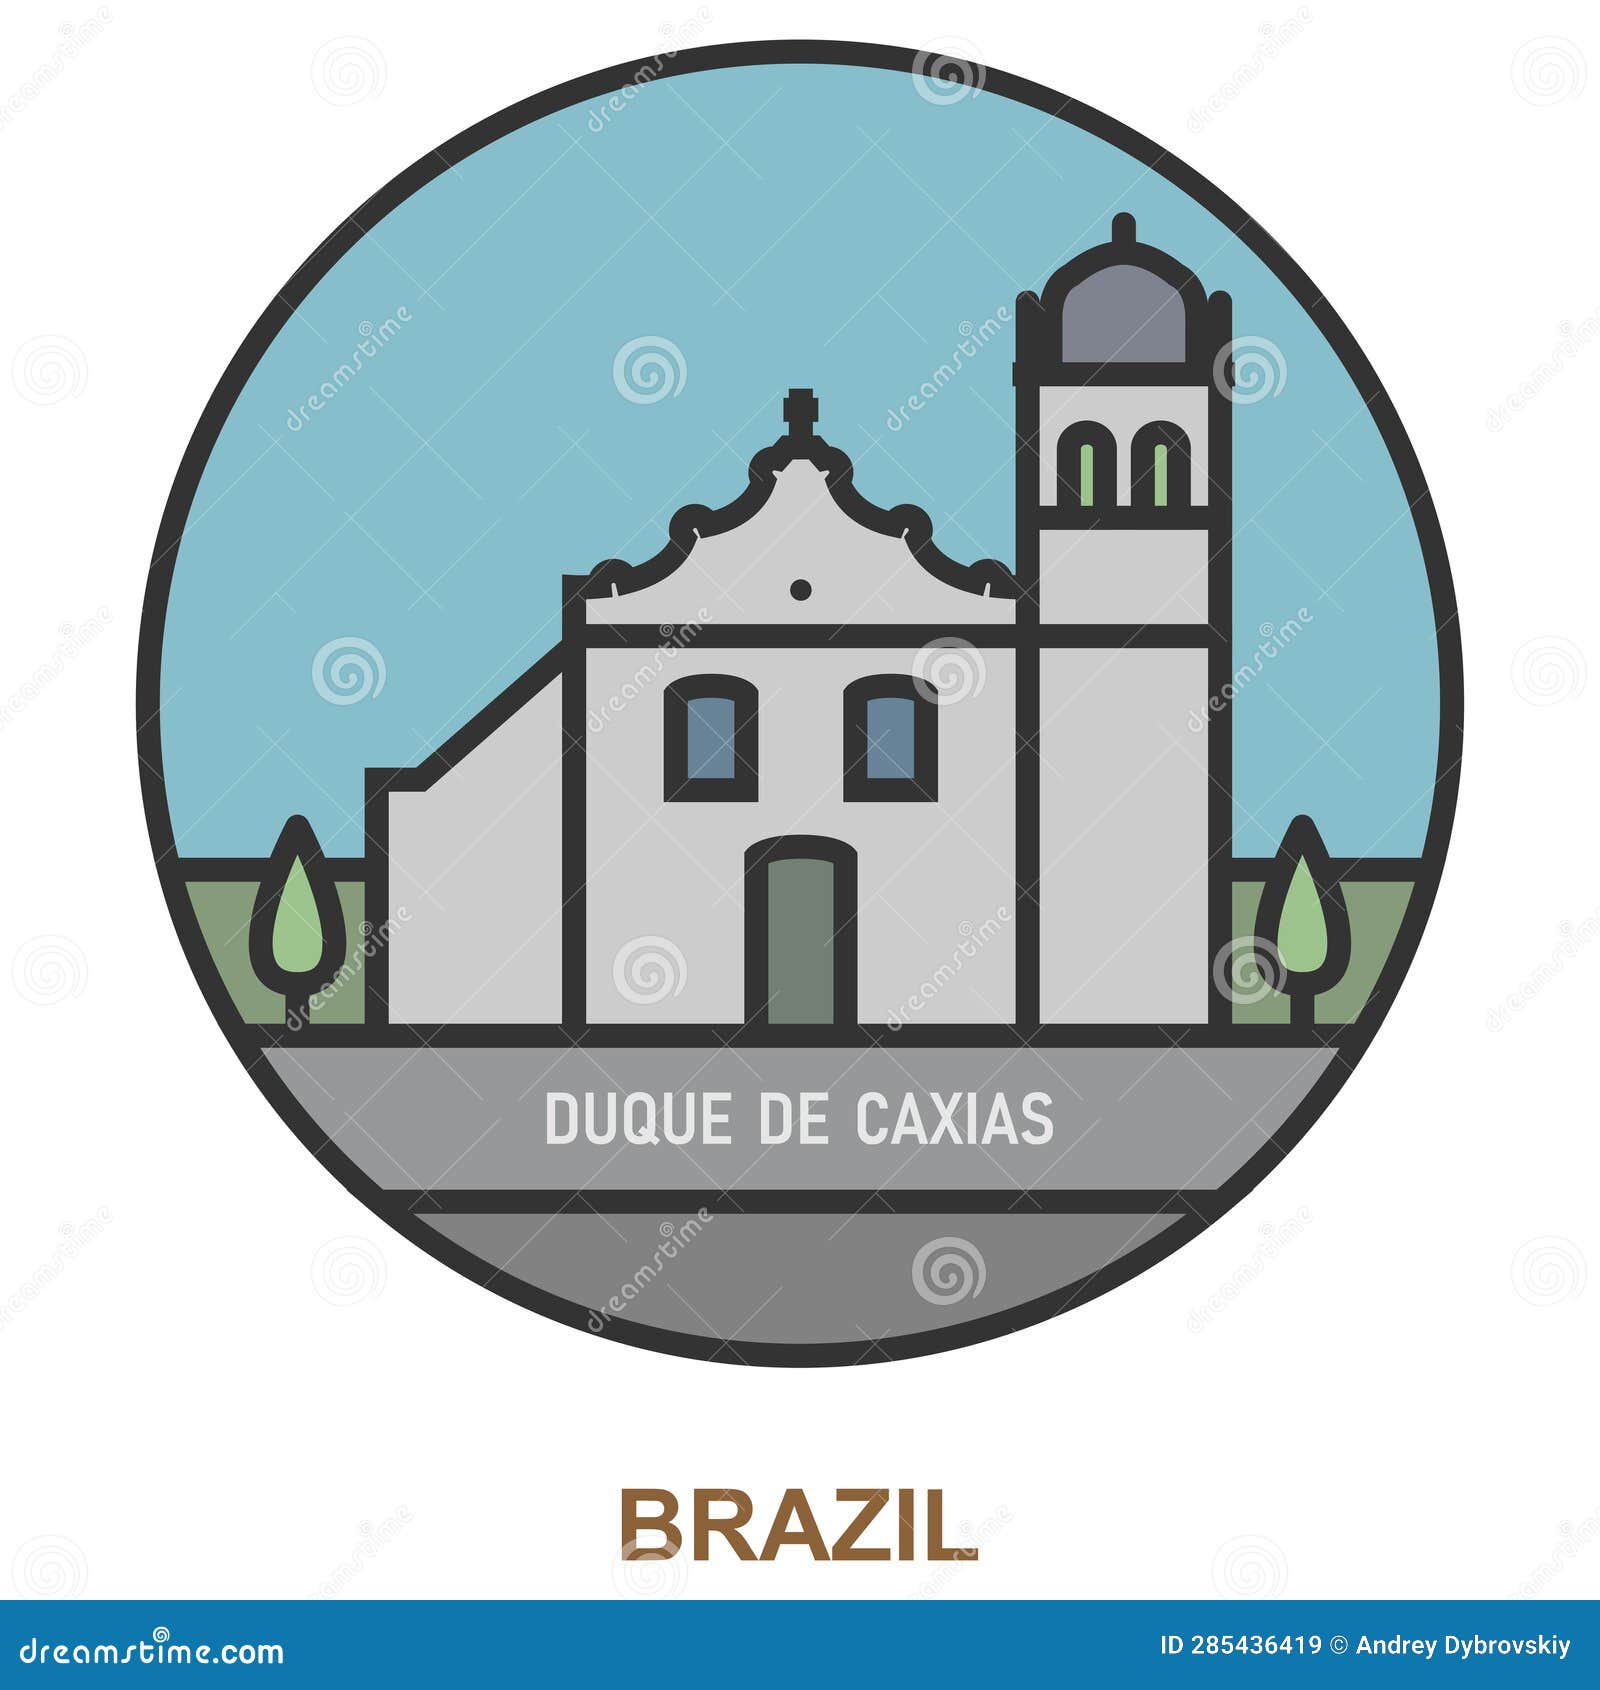 duque de caxias. cities and towns in brazil